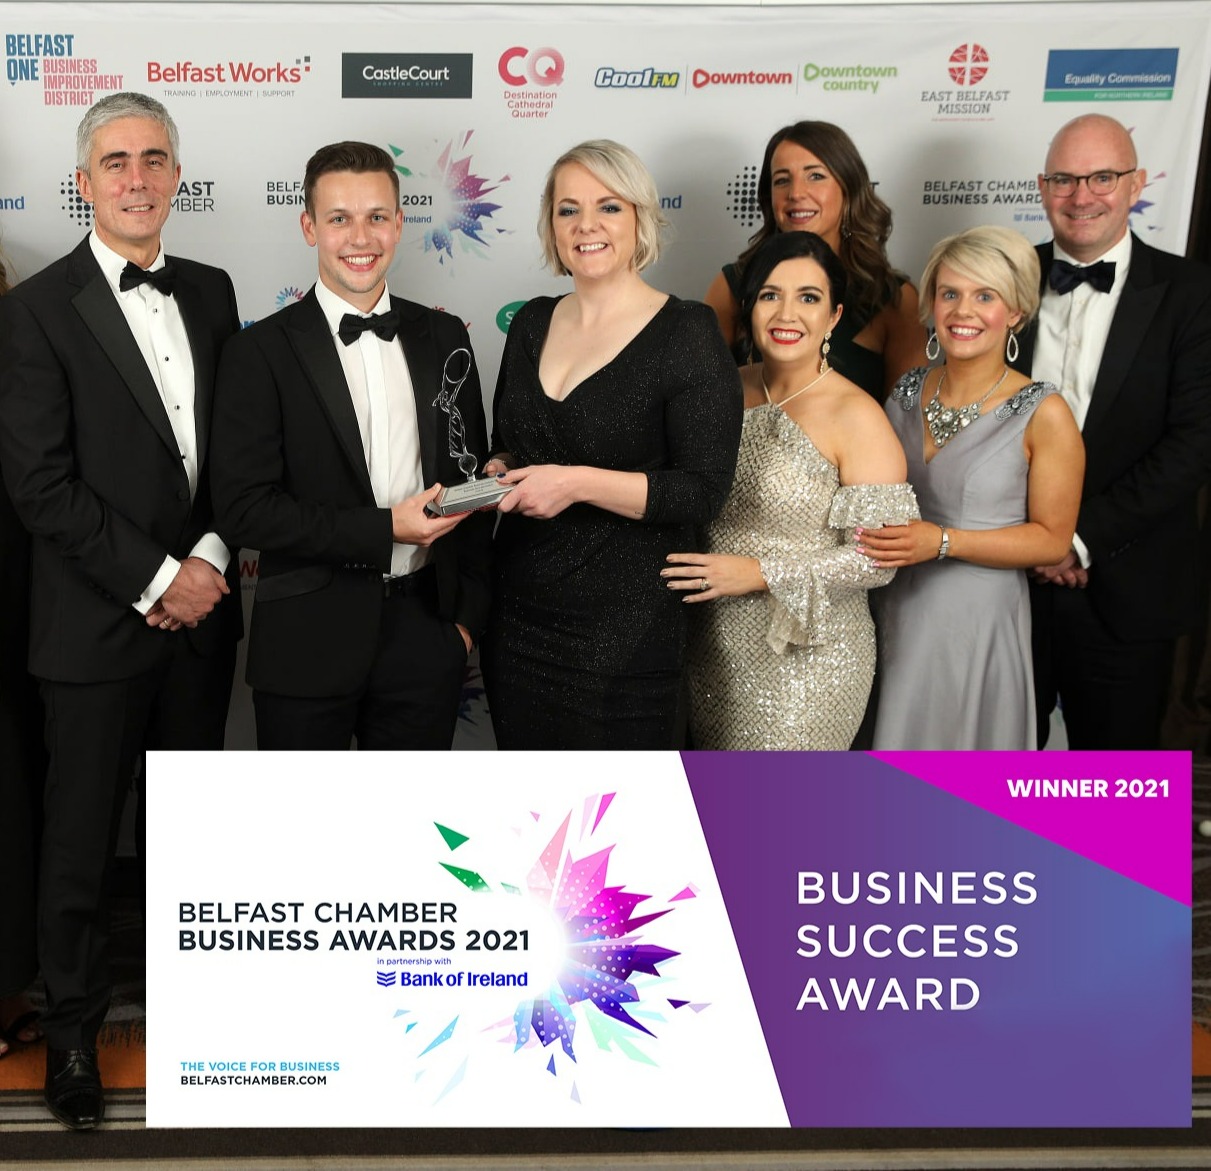 Belfast Chamber Business Awards – Business Success Award 2021 Image